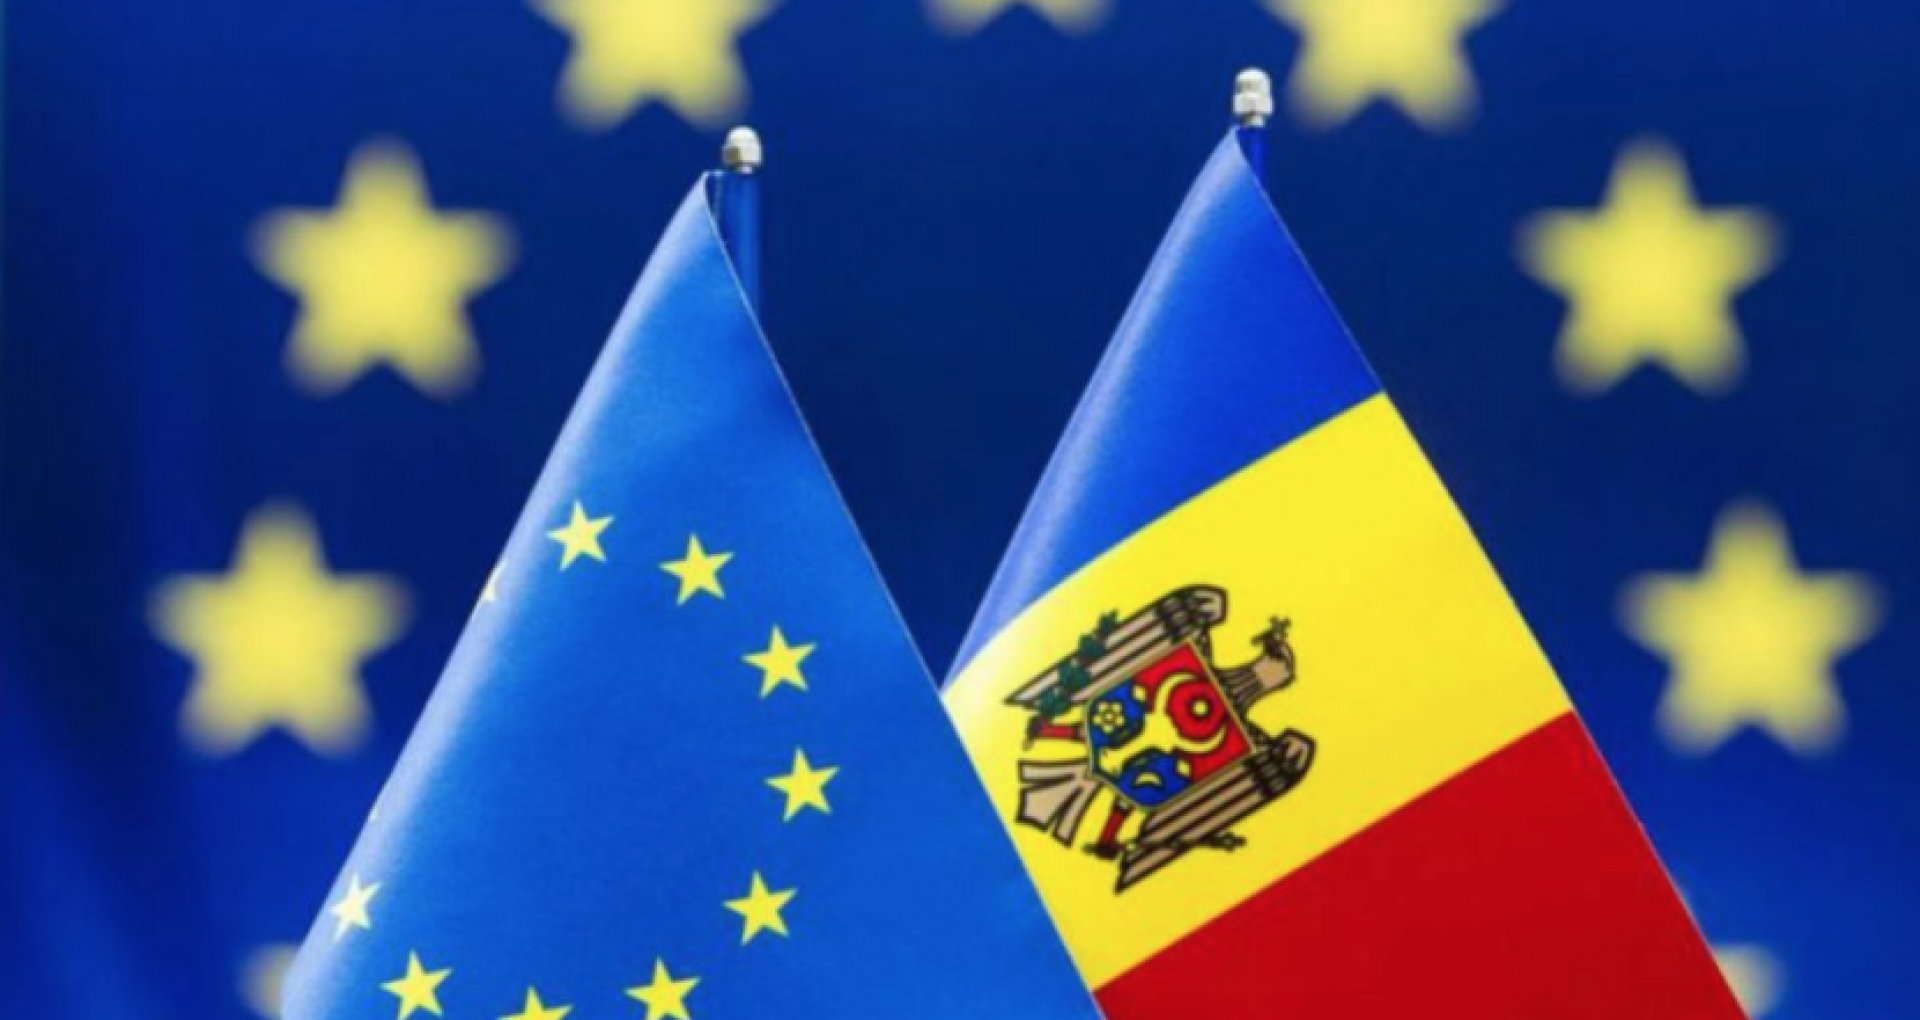 EU – Moldova Relations and Future Developments Discussed During High-level Visit of EU Officials to Chișinău